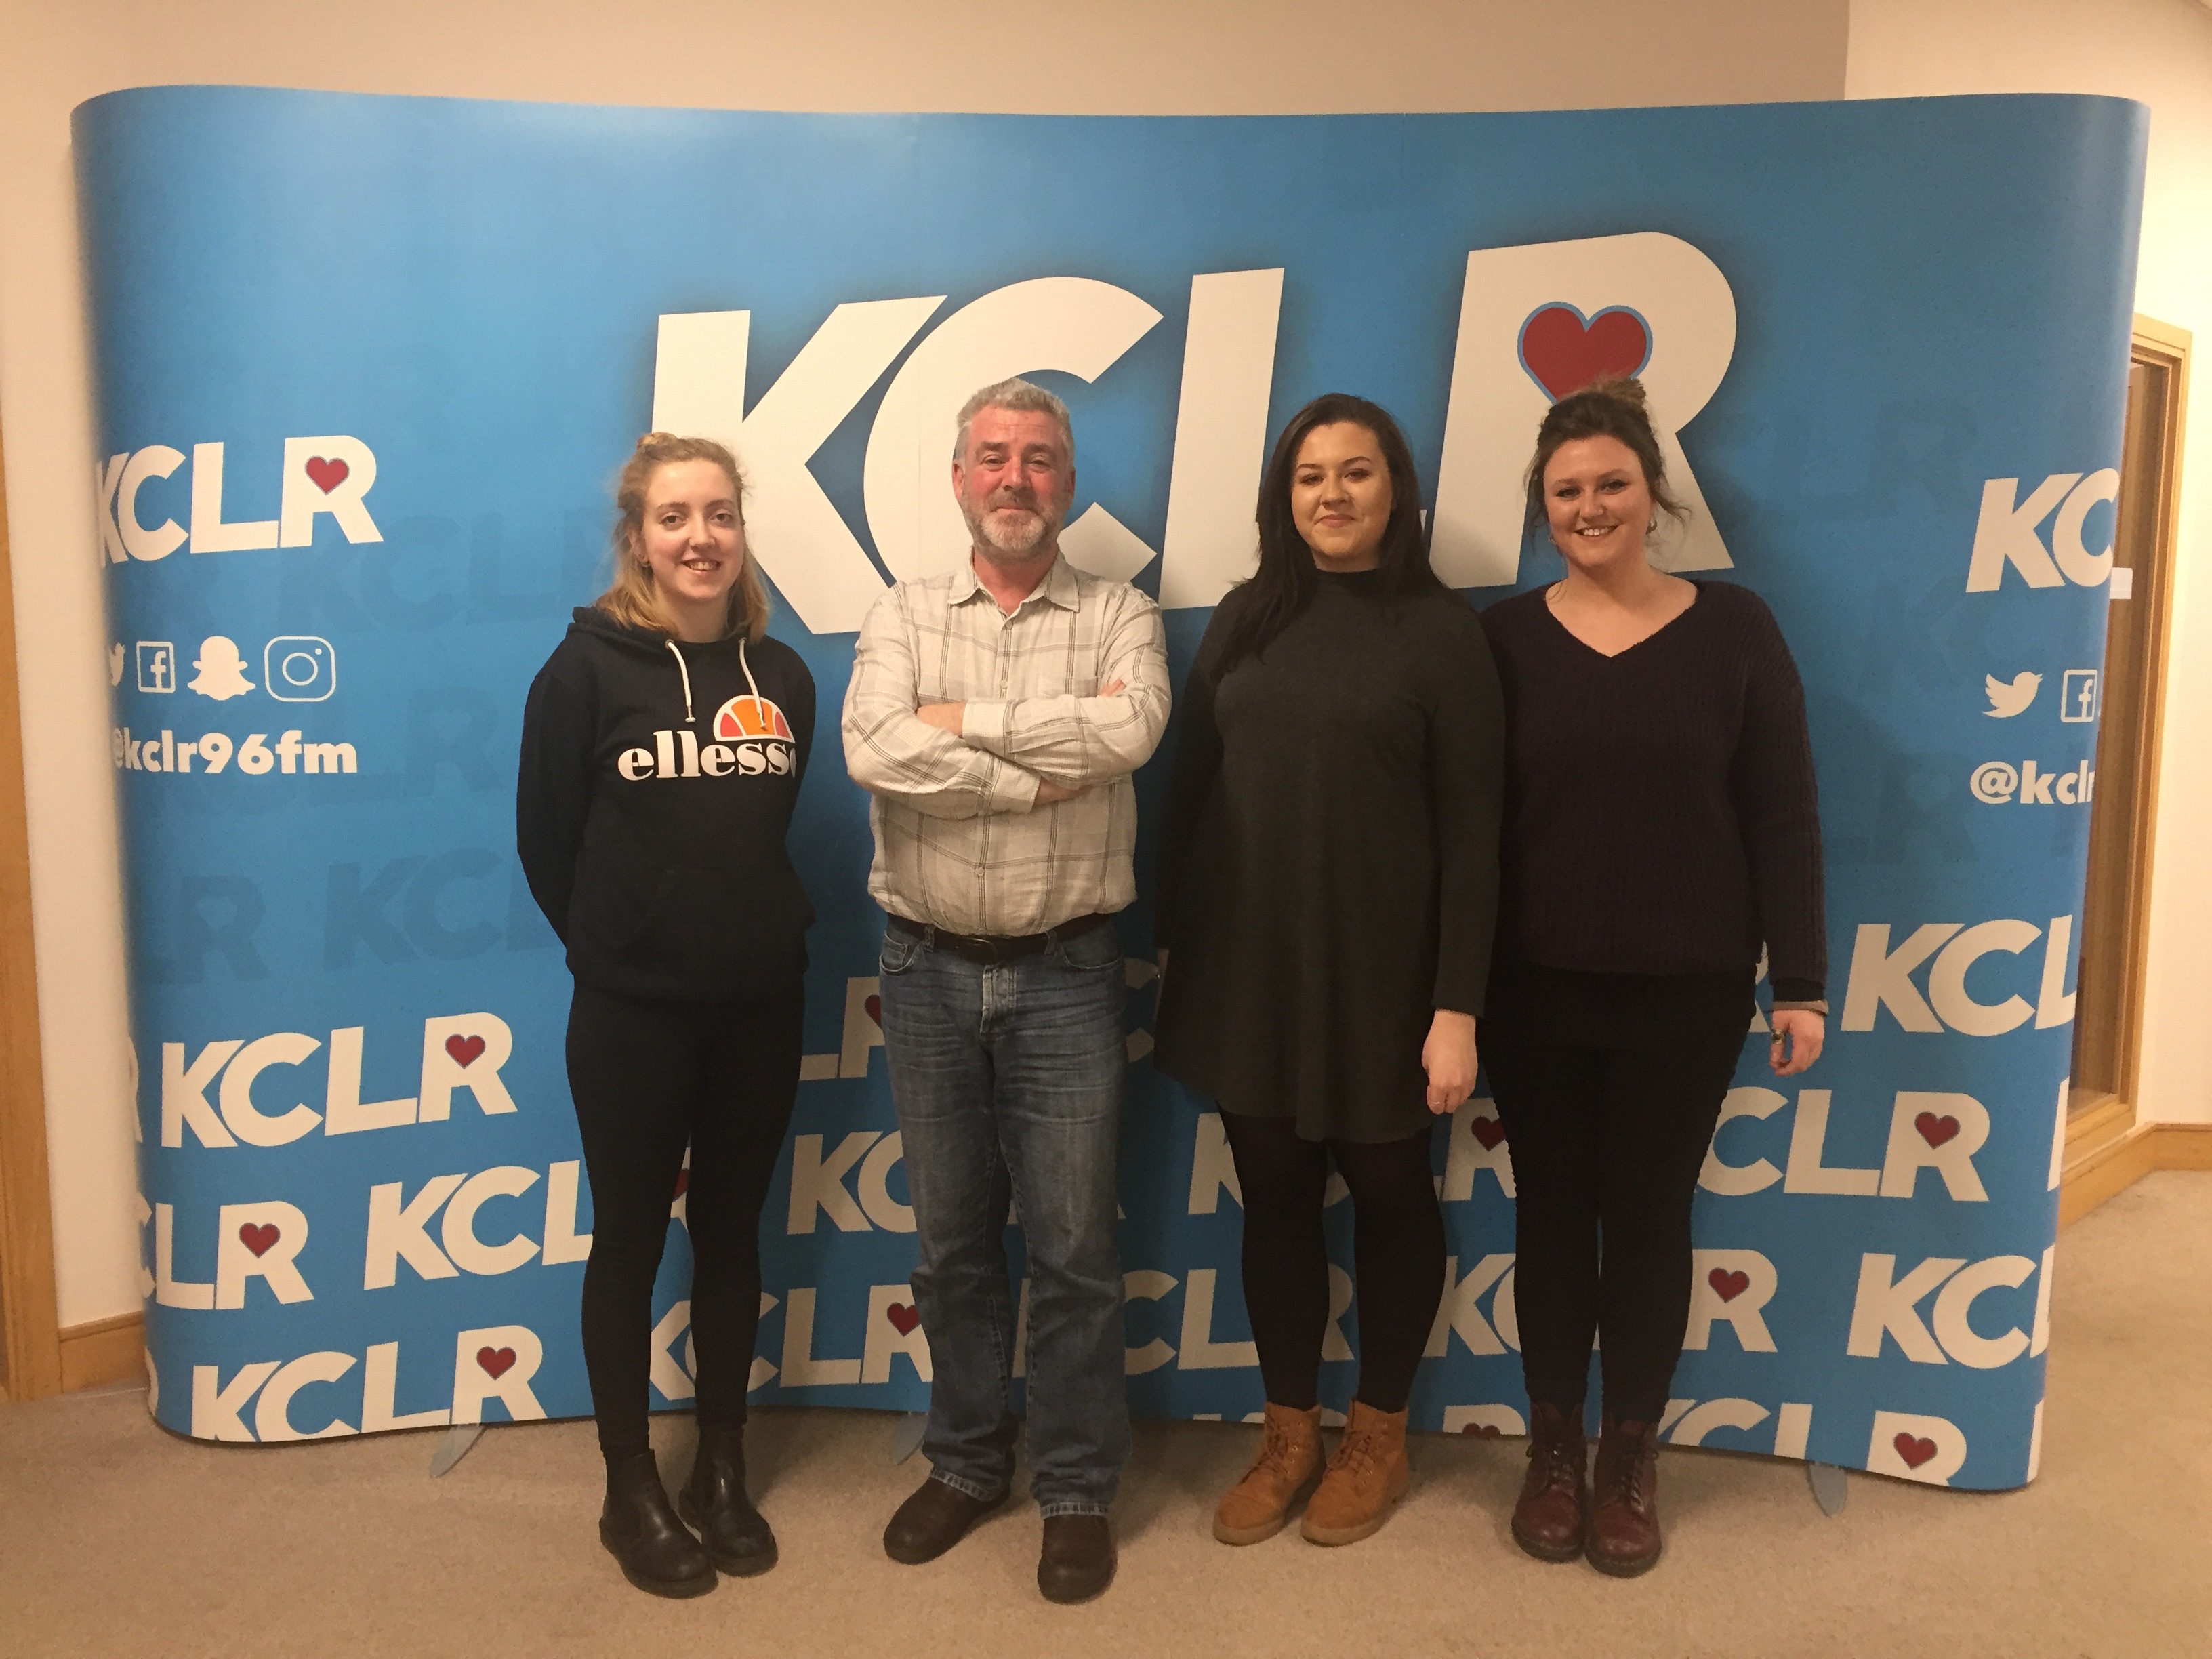 Kilkenny band "Sola": Clare Lynch, Siobhan Cody and Bridget Cody, In a Studio 2 Session at KCLR with Martin Bridgeman for "Ceol Anocht